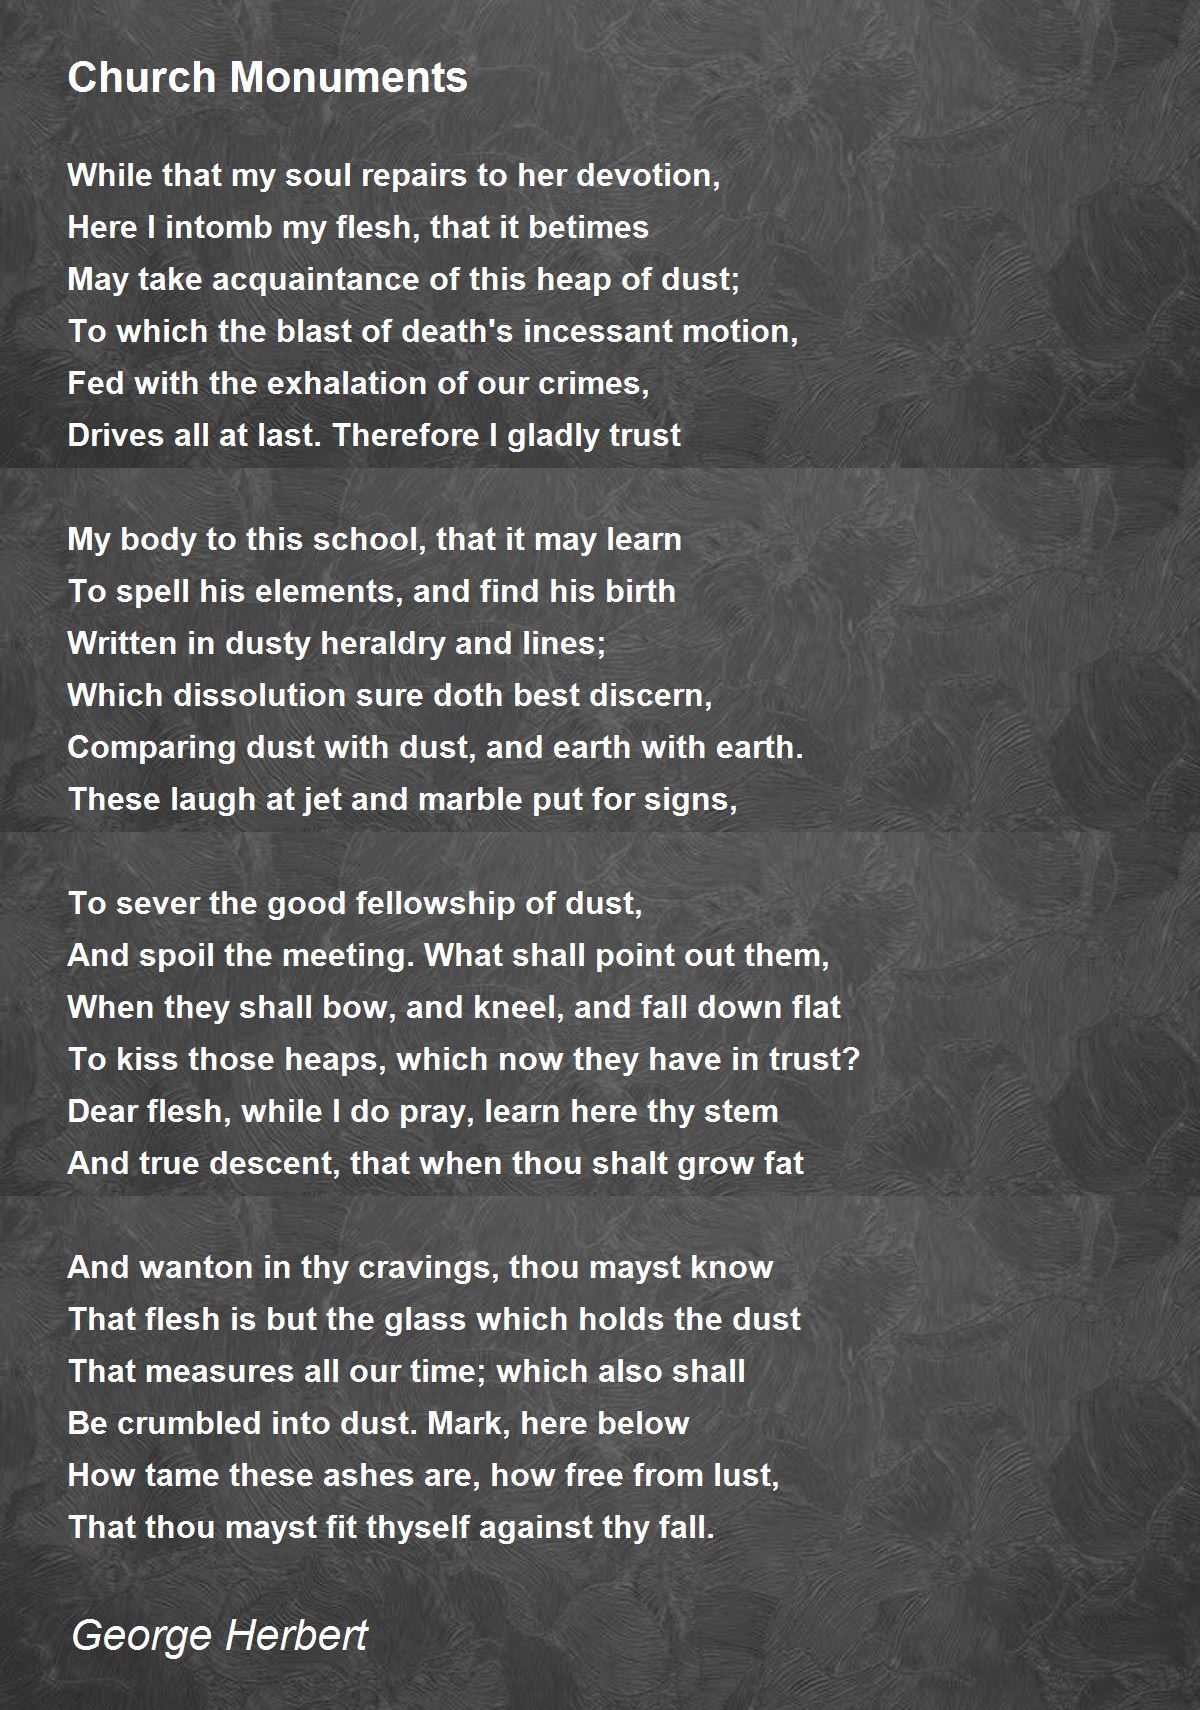 Church Monuments Poem by George Herbert - Poem Hunter